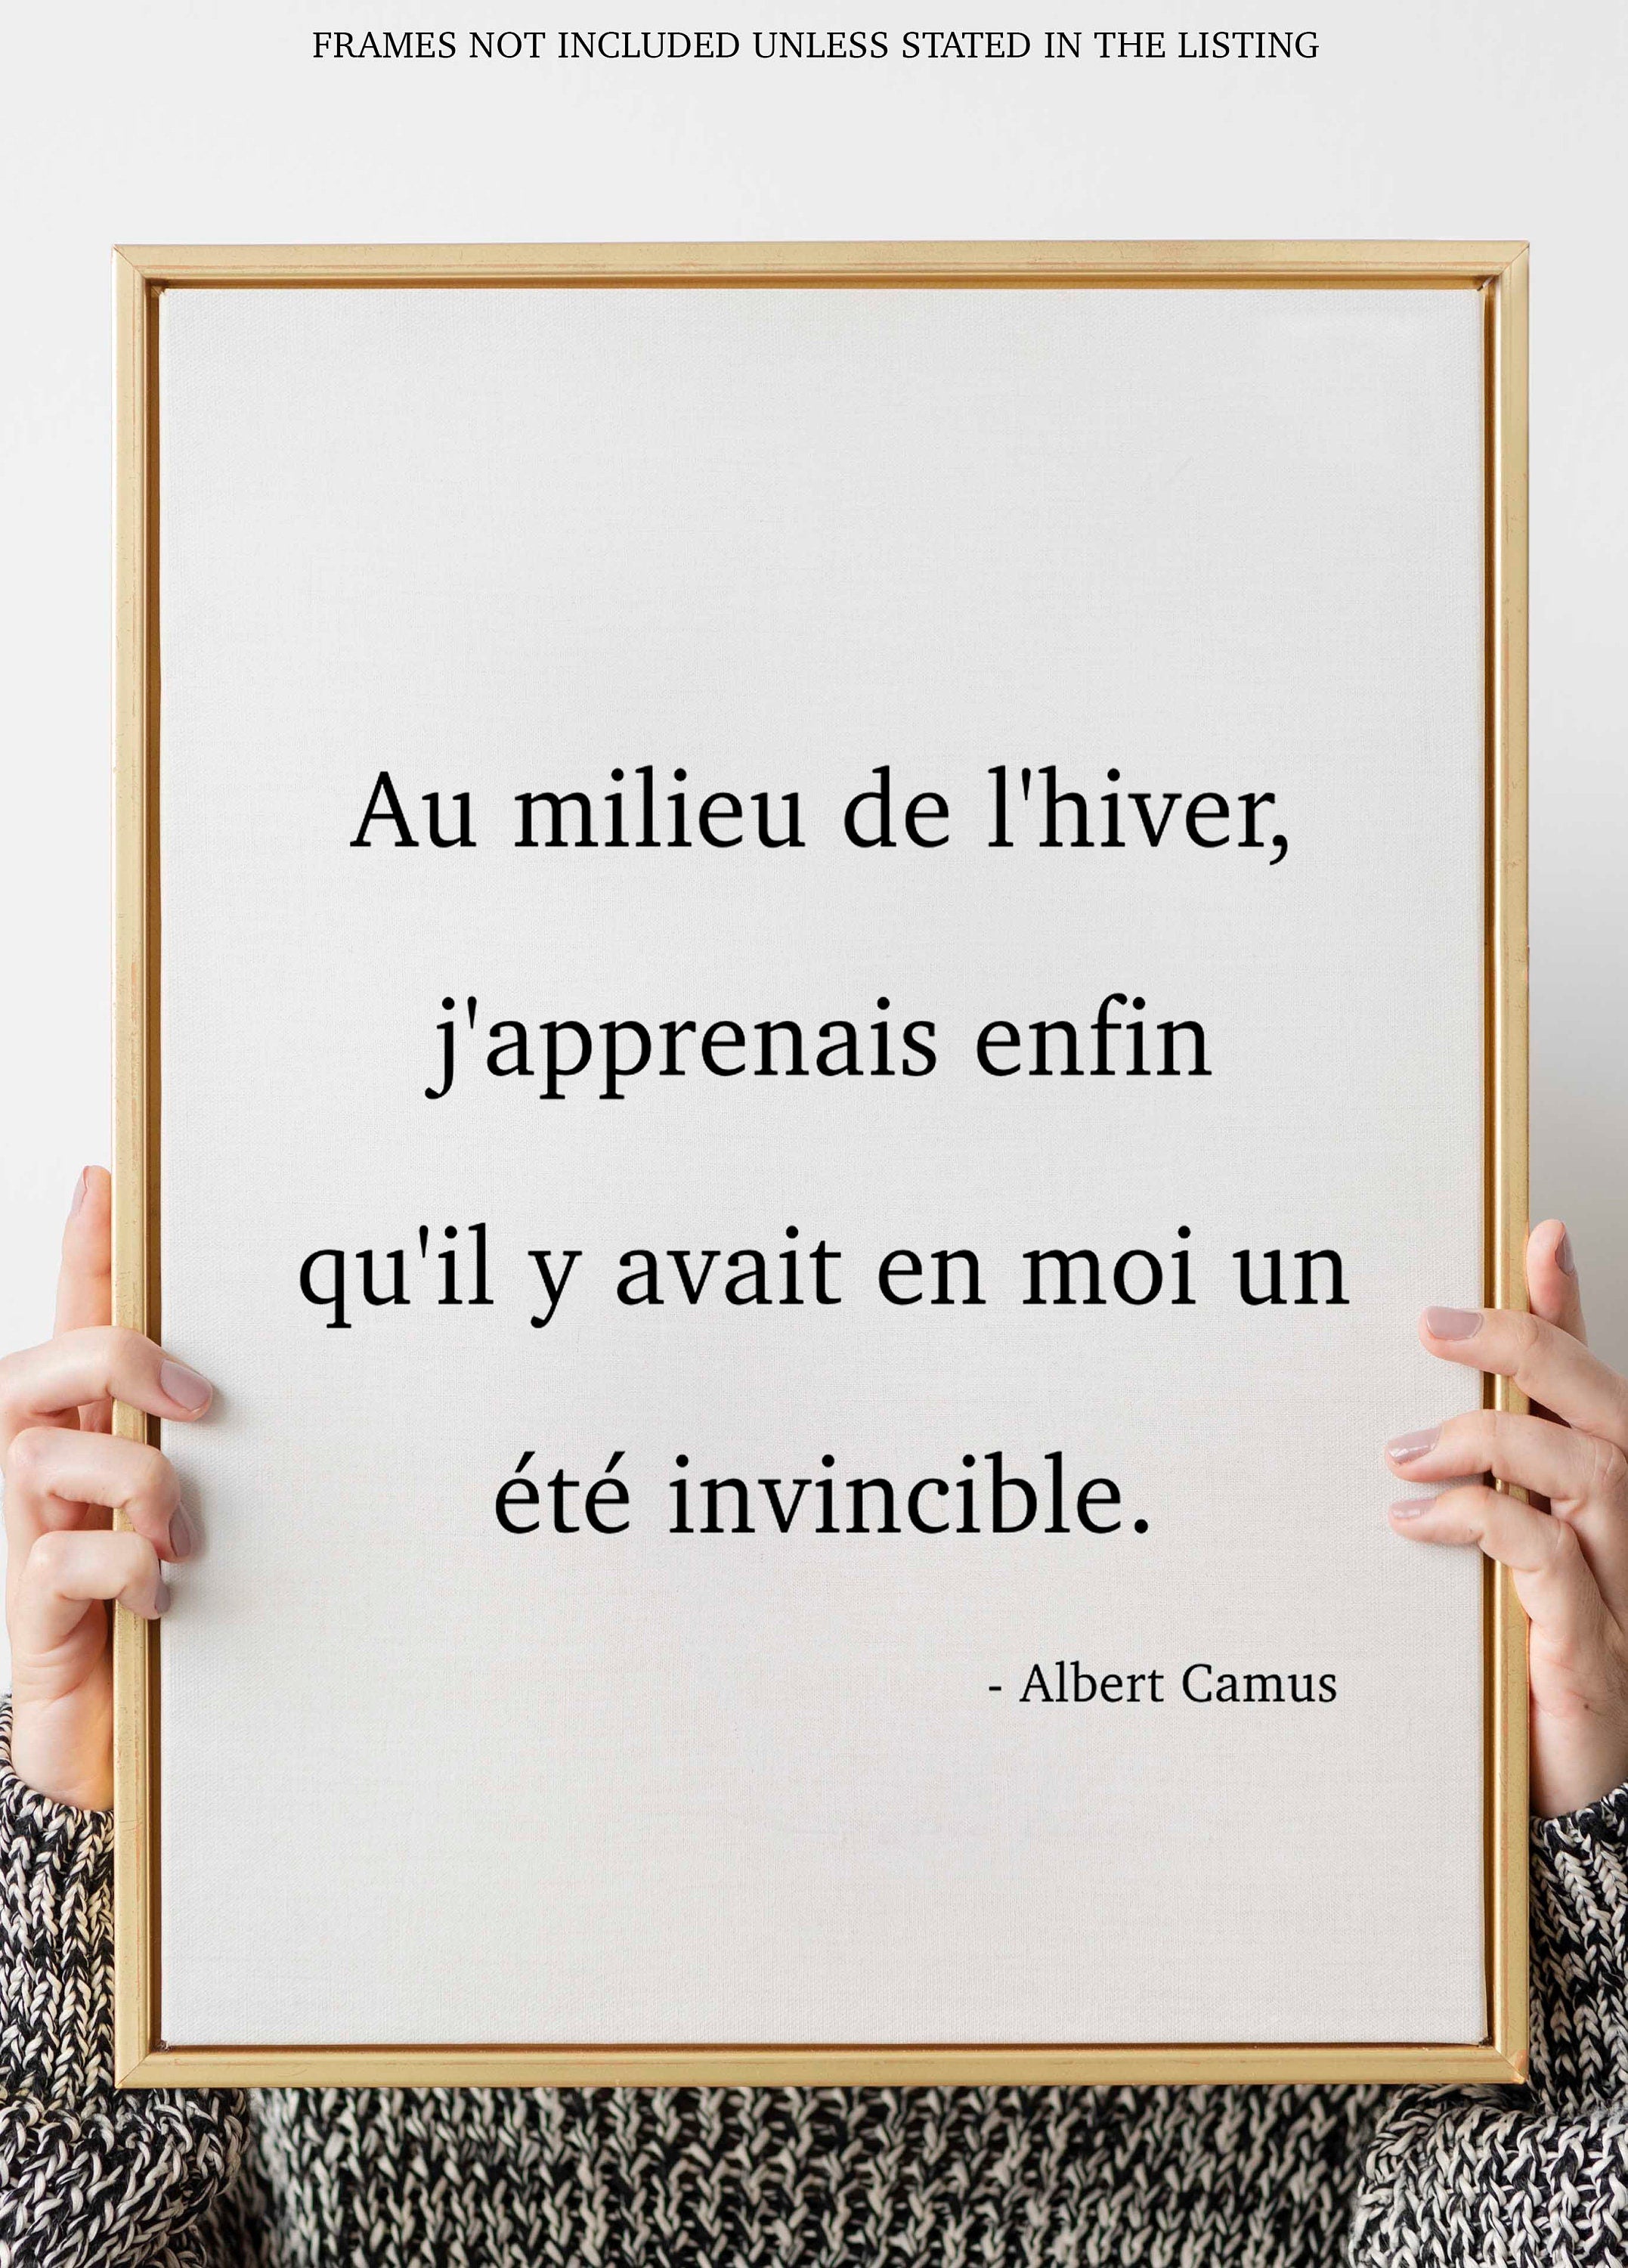 Albert Camus Quote Print in French - un été invincible, Invincible Summer wall art print